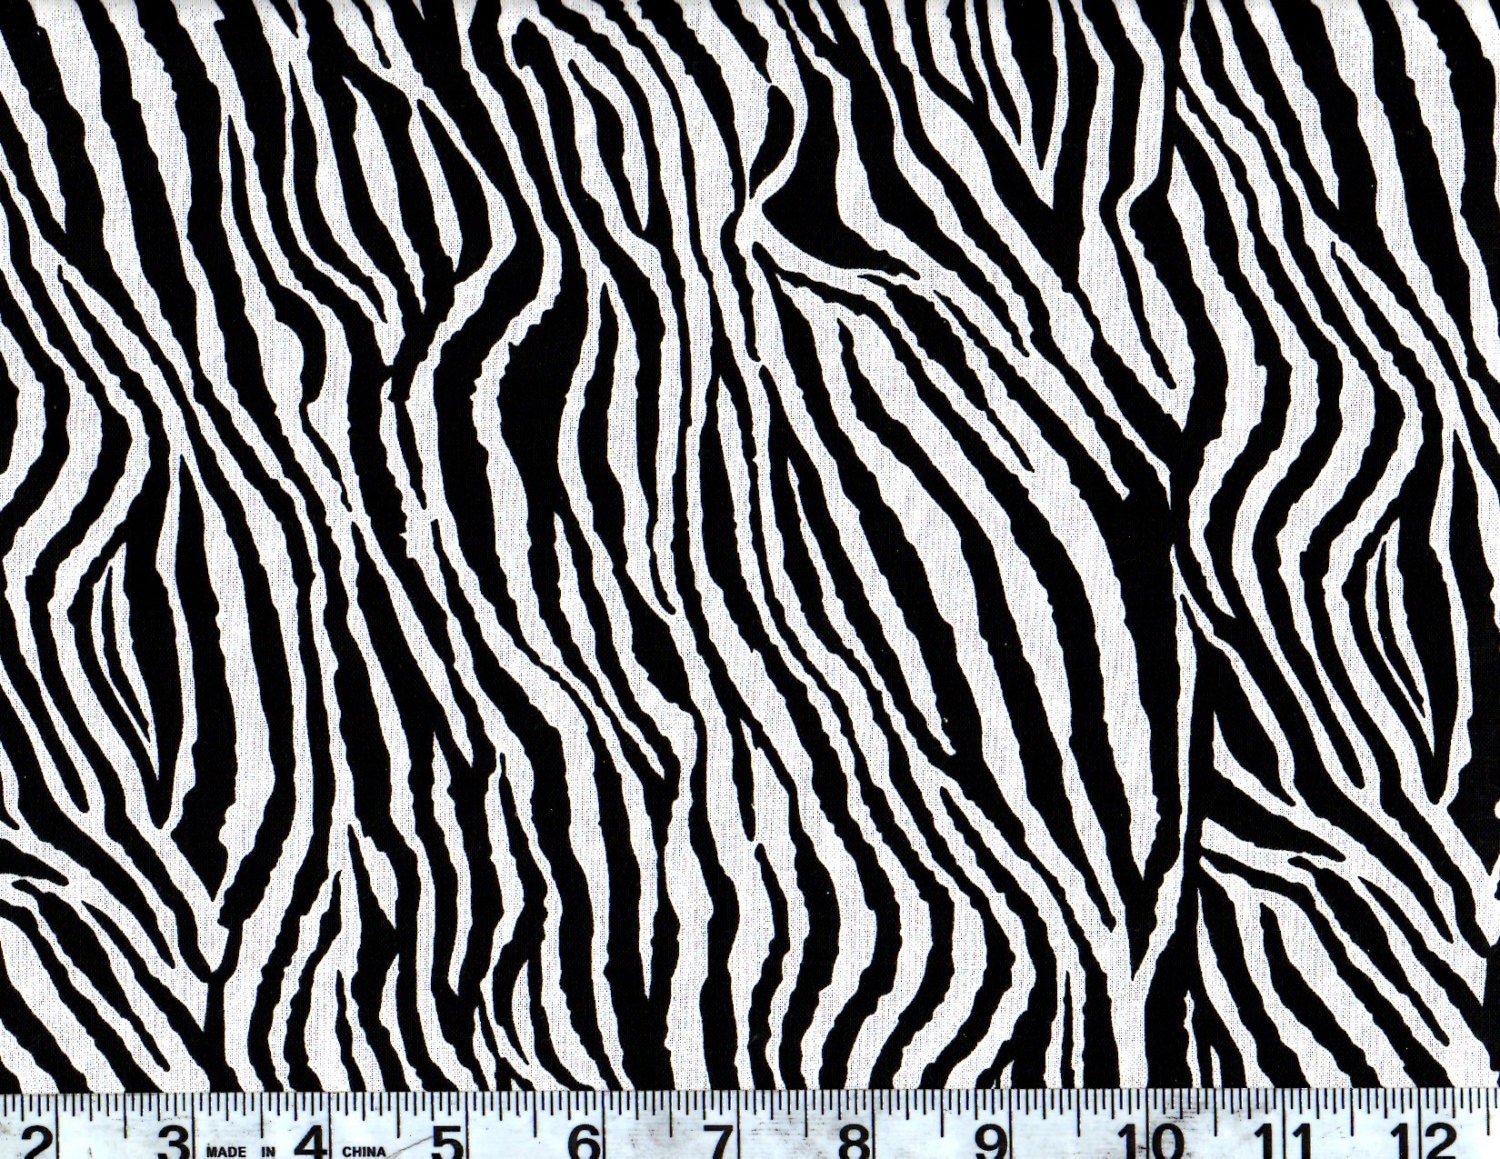 Animal Print Cotton Fabric Zebra Skin Print By the Yard